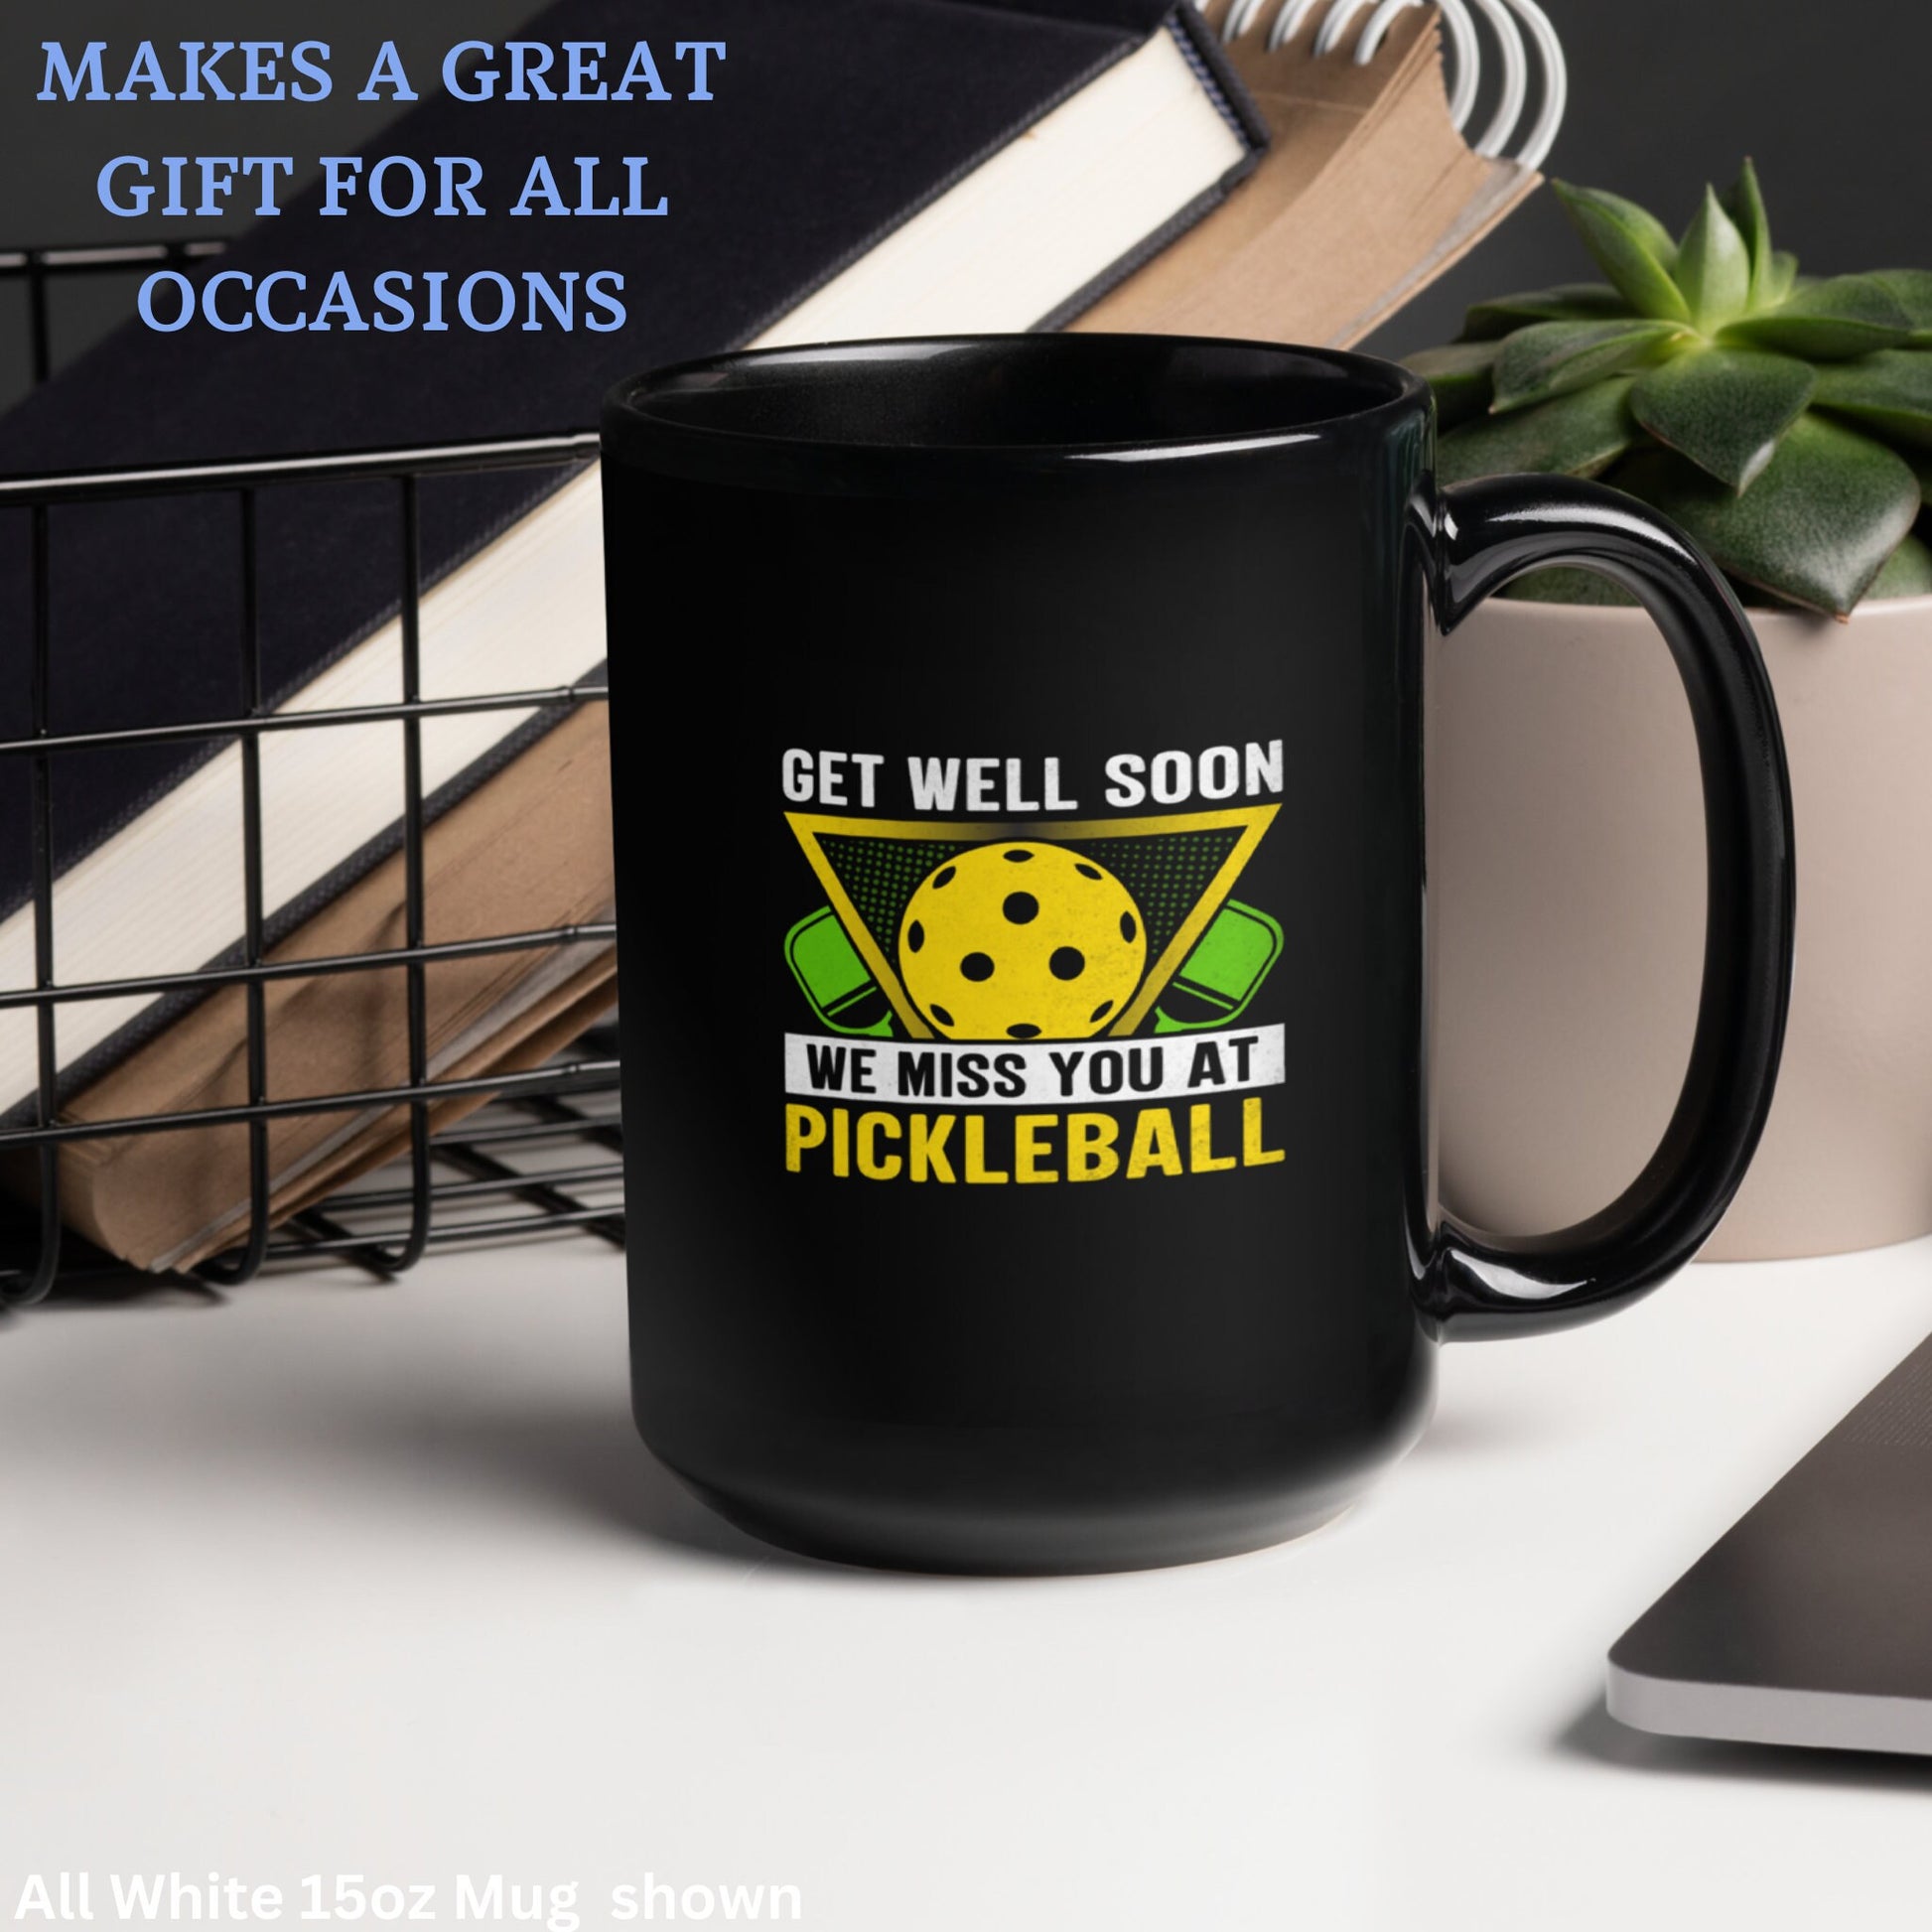 Get Well Soon Mug, We Miss You at Pickleball Mug - Zehnaria - HOBBIES & TRAVEL - Mugs